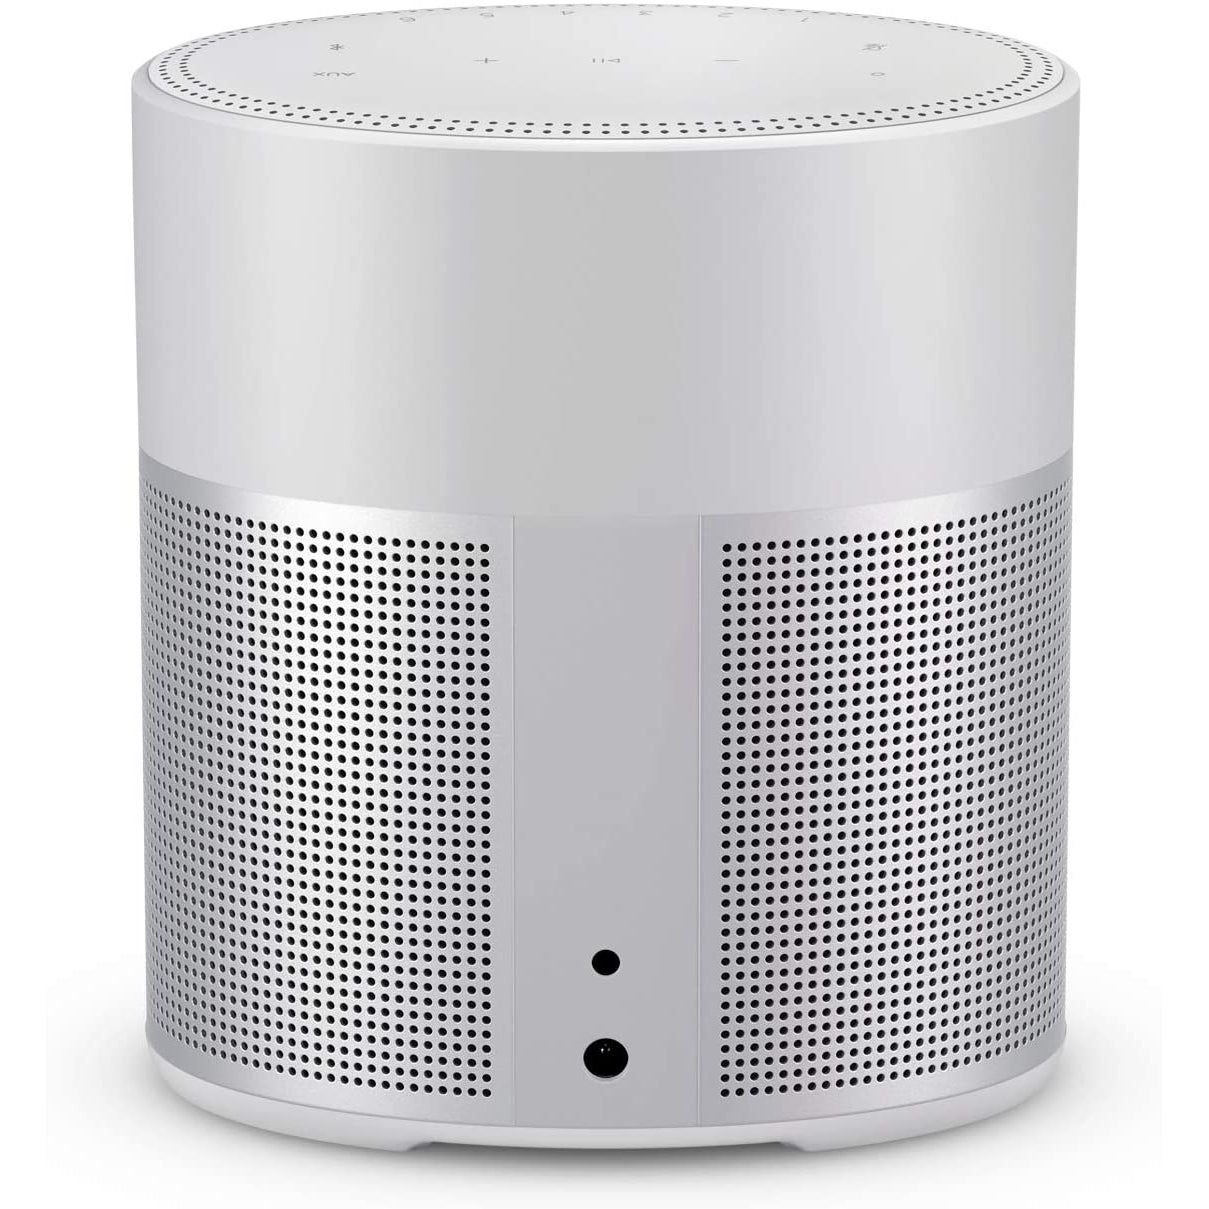 Bose Home Smart Speaker 300 - Silver - Refurbished Pristine